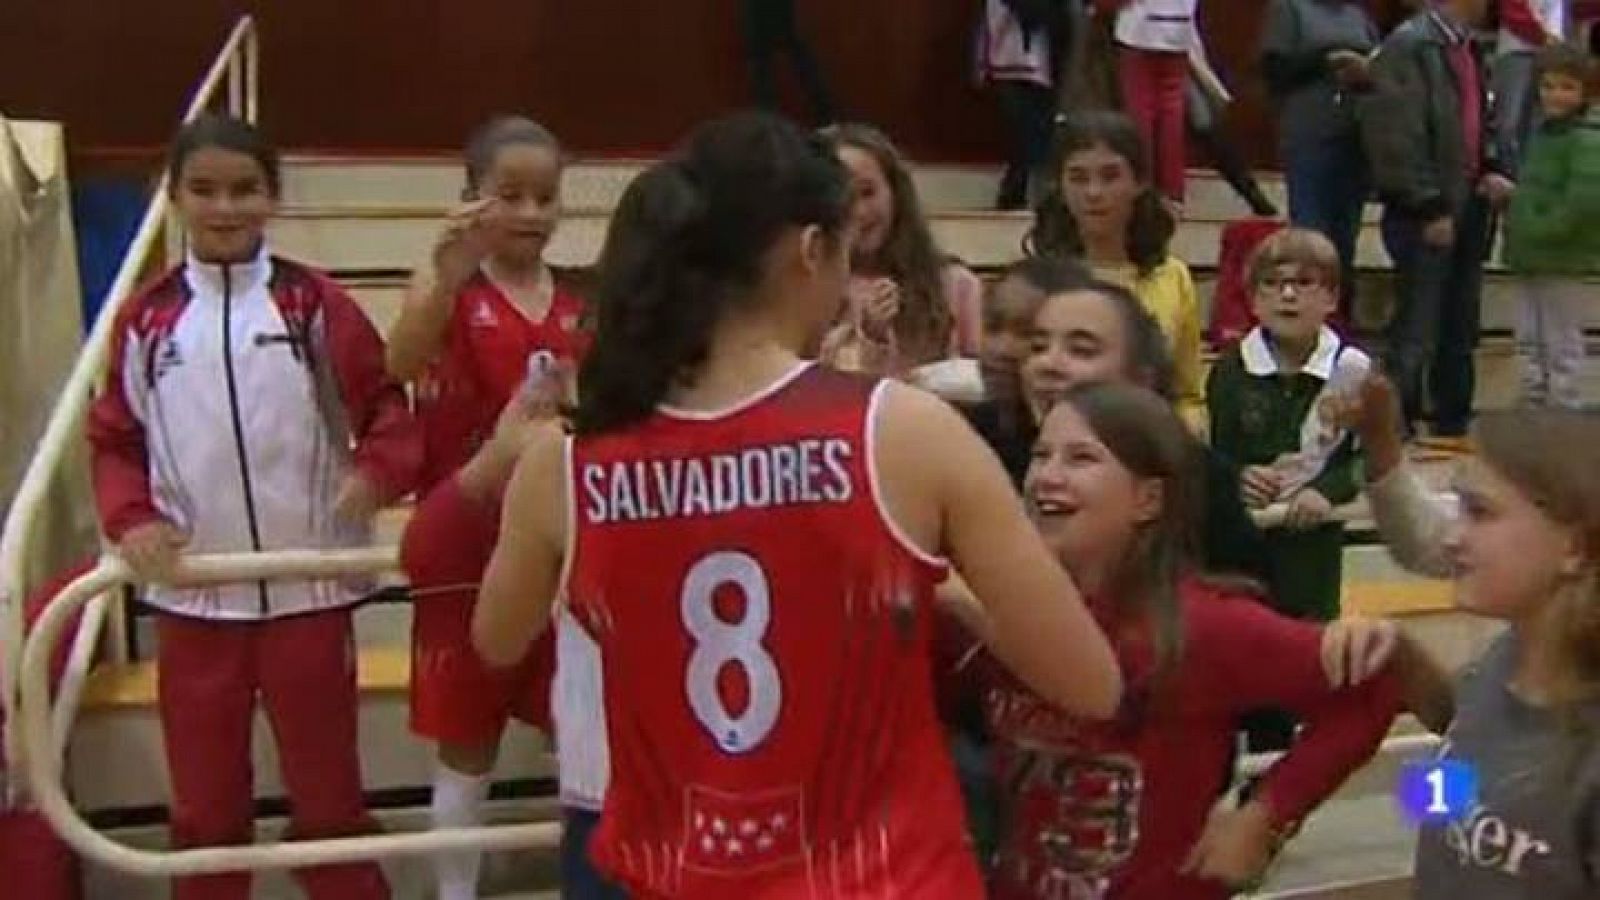 Telediario 1: Ángela Salvadores, la perla del baloncesto femenino español | RTVE Play